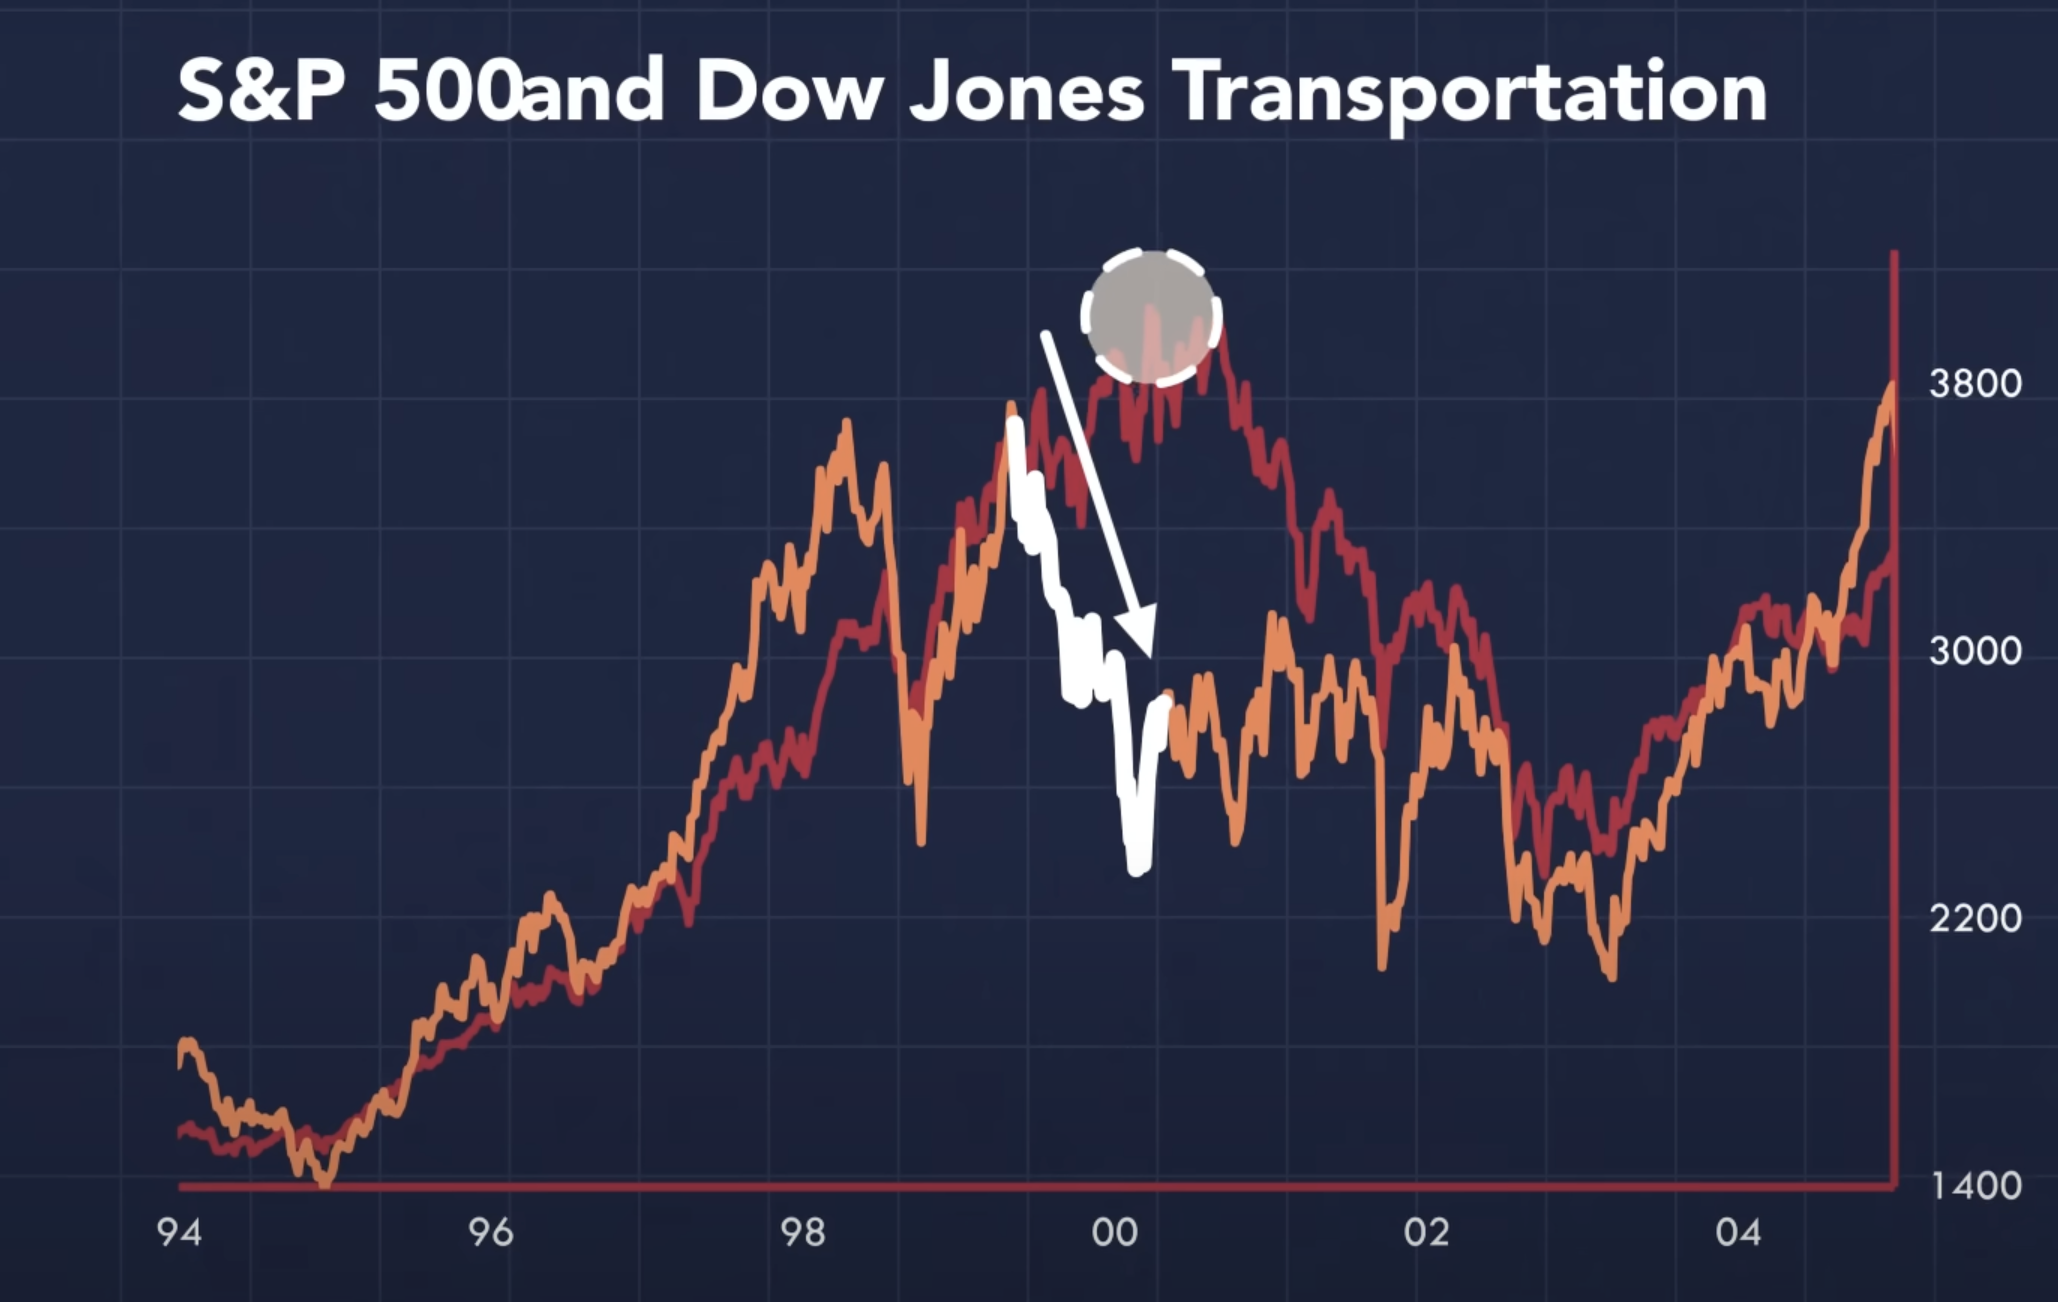 S&P 500 and Dow Jones Transportation